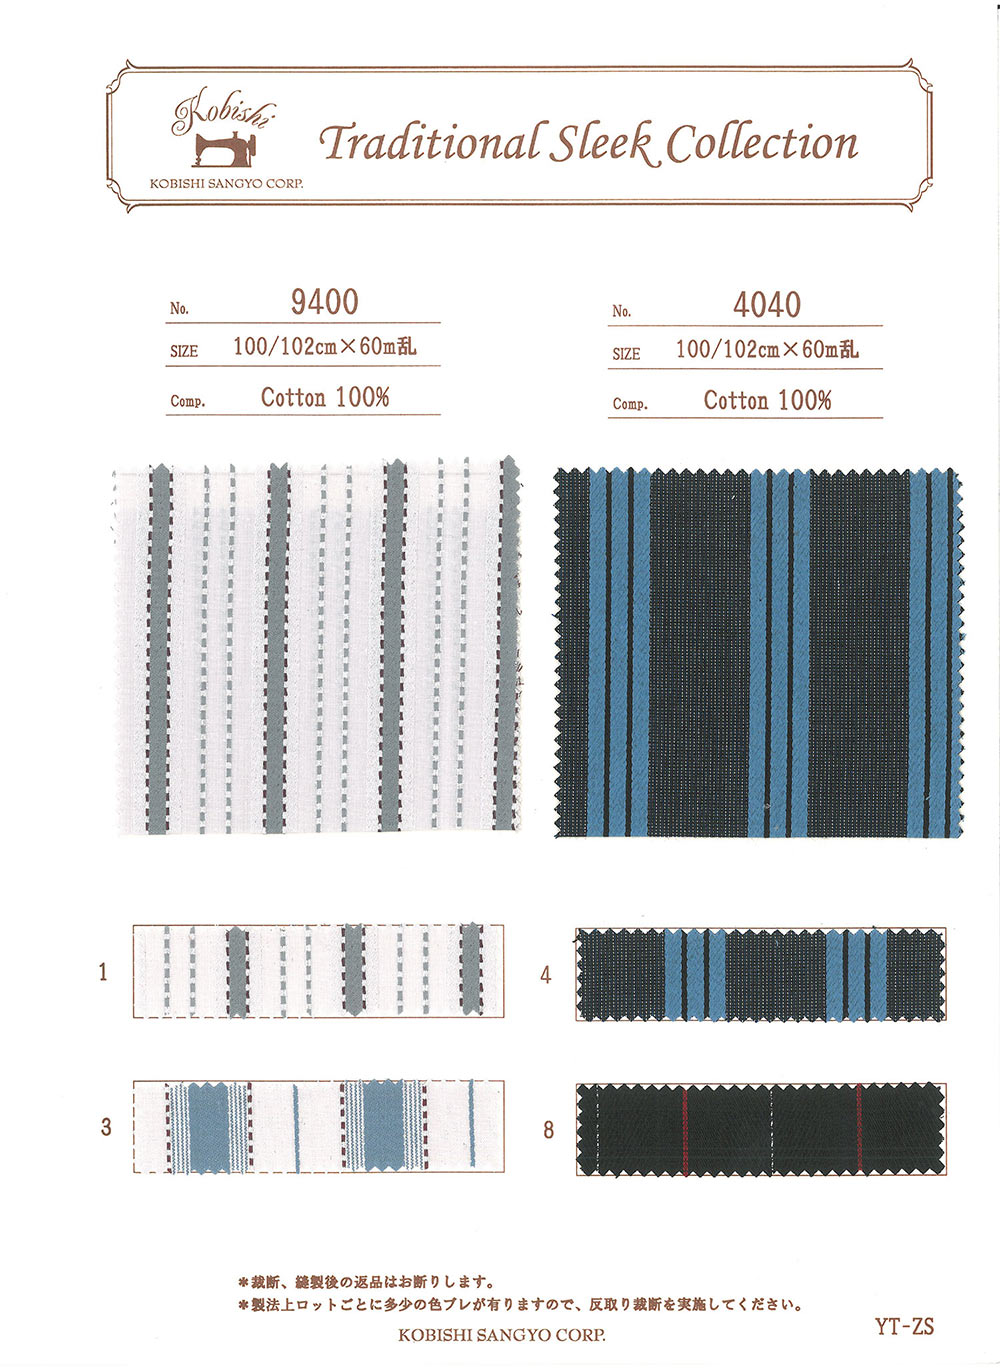 4040 Fodera Tasca A Righe[Fodera Tascabile] Ueyama Textile